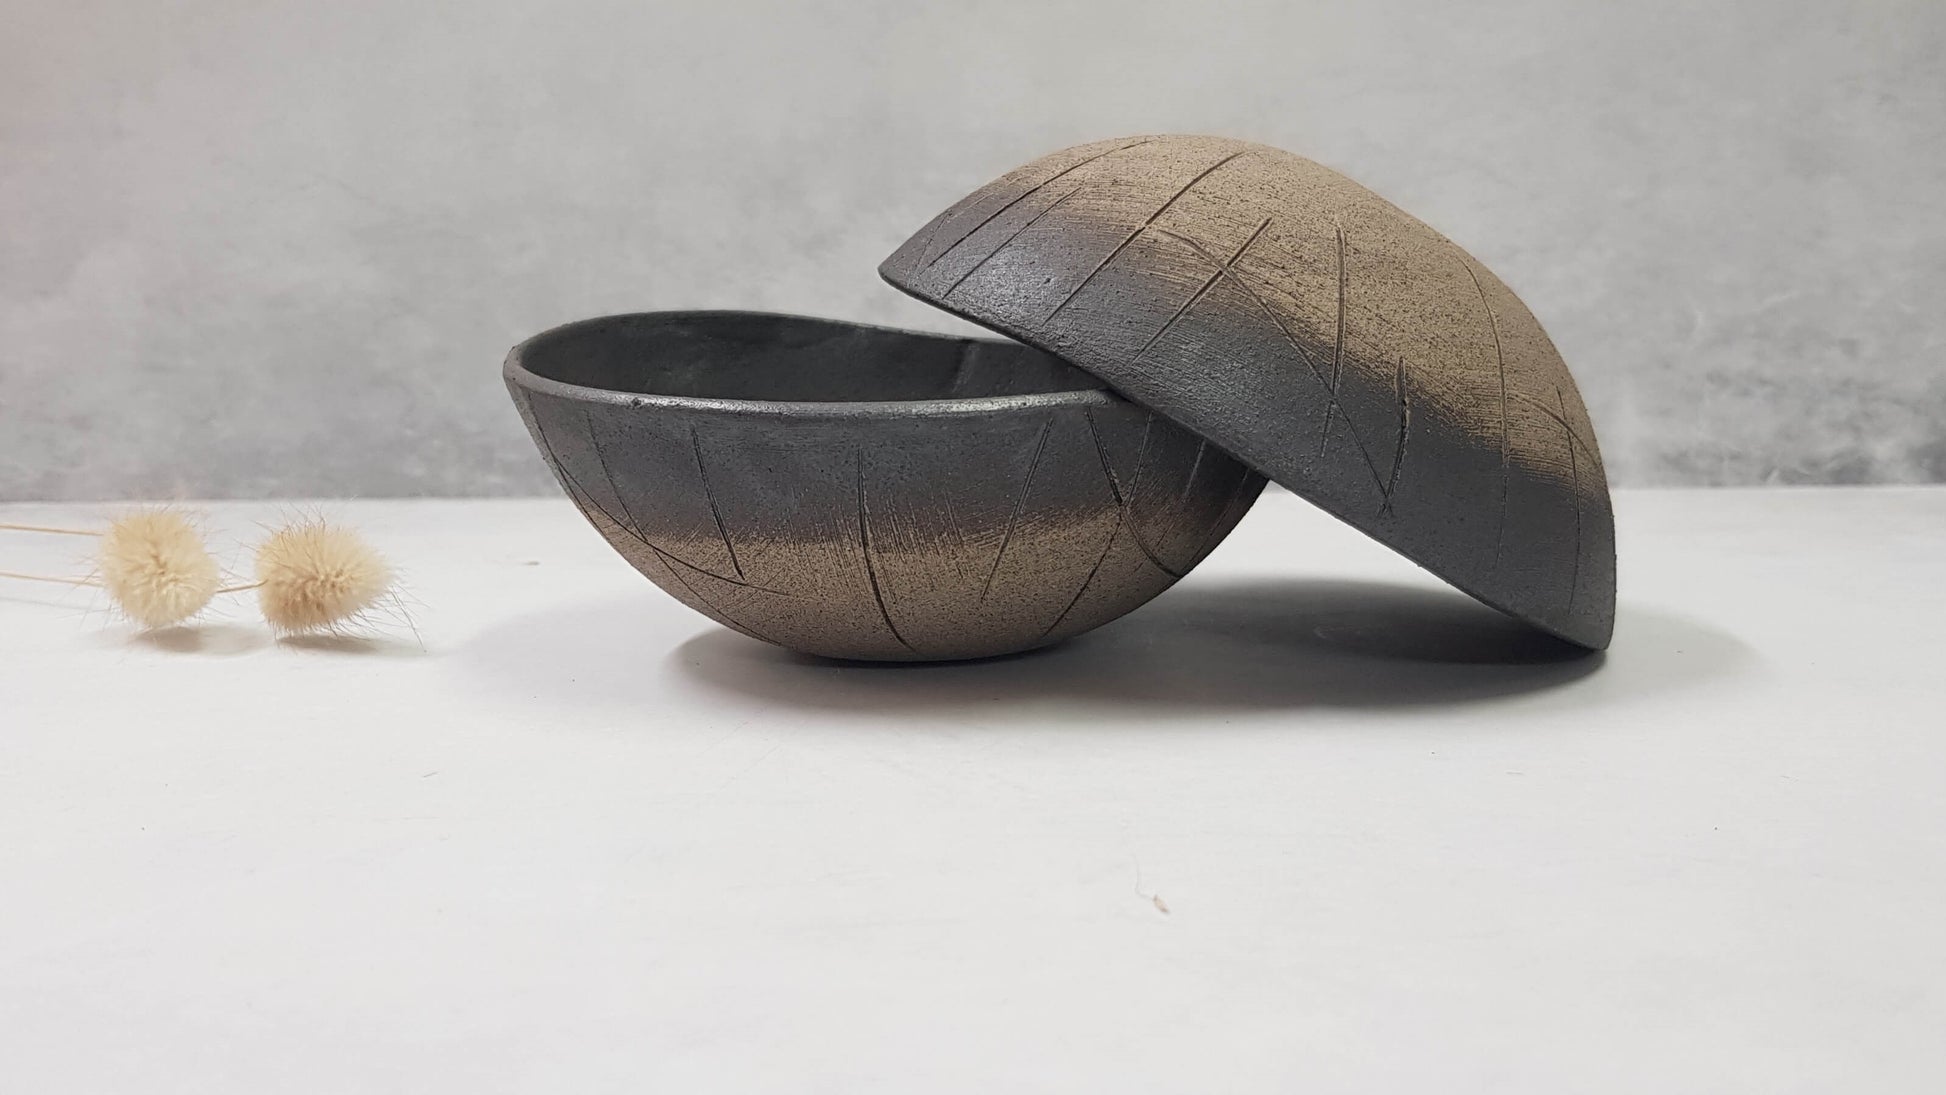 Two black ceramic bowls